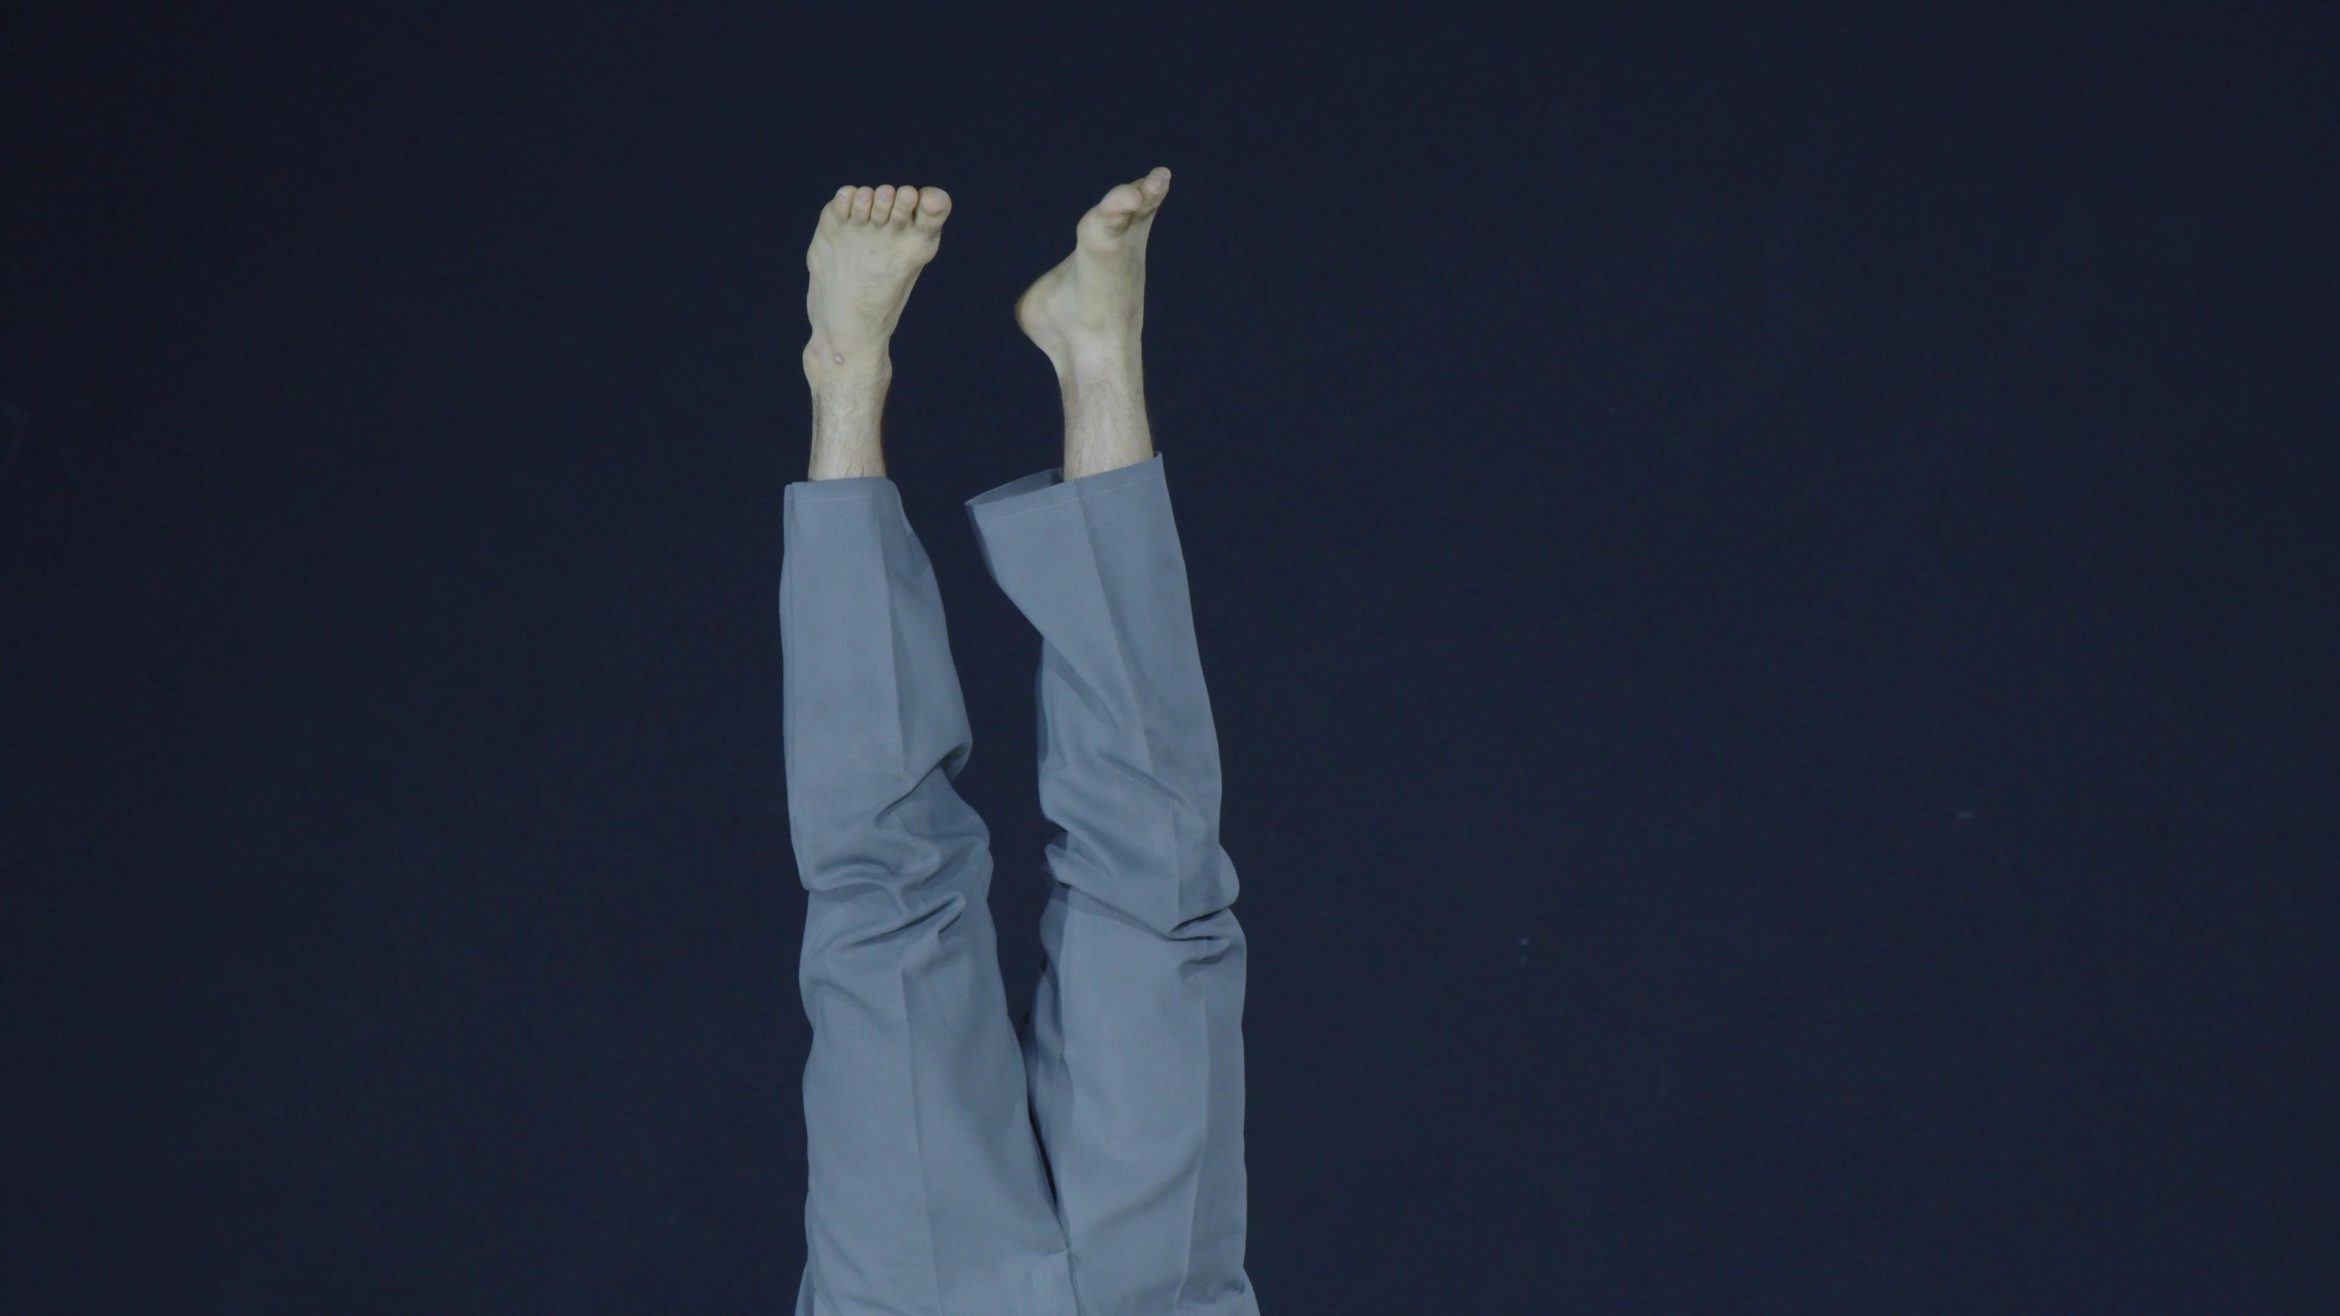 A dancers feet in the air while upside down